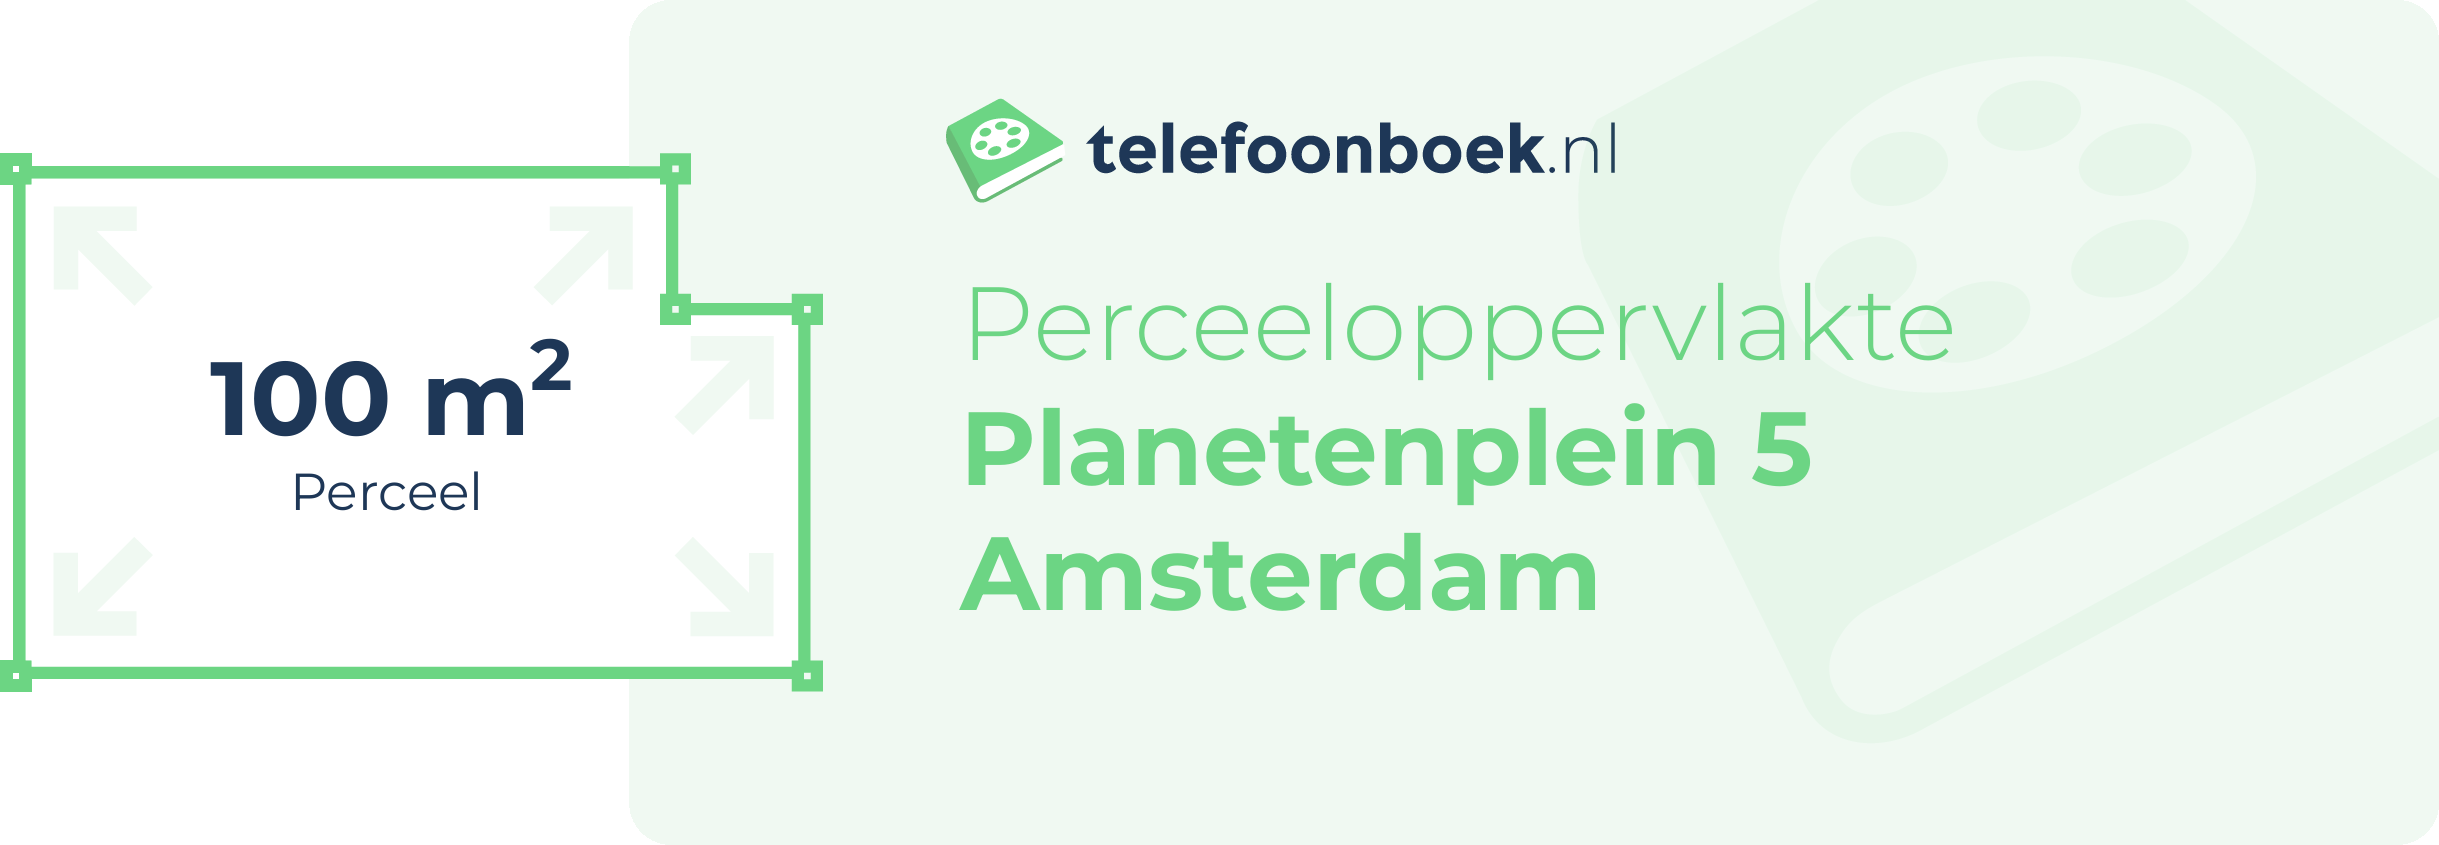 Perceeloppervlakte Planetenplein 5 Amsterdam